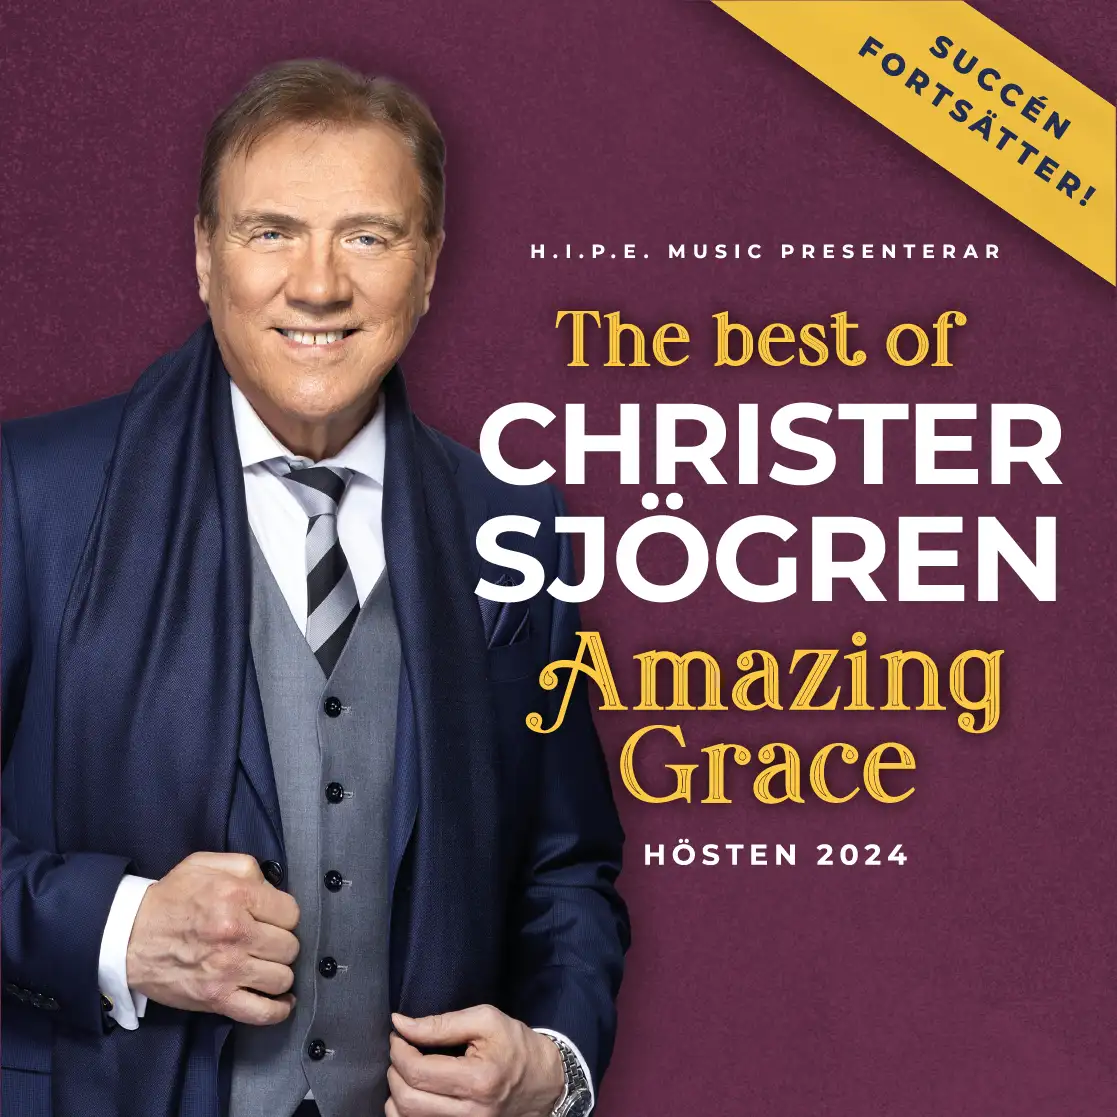 The best of Christer Sjögren – Amazing Grace